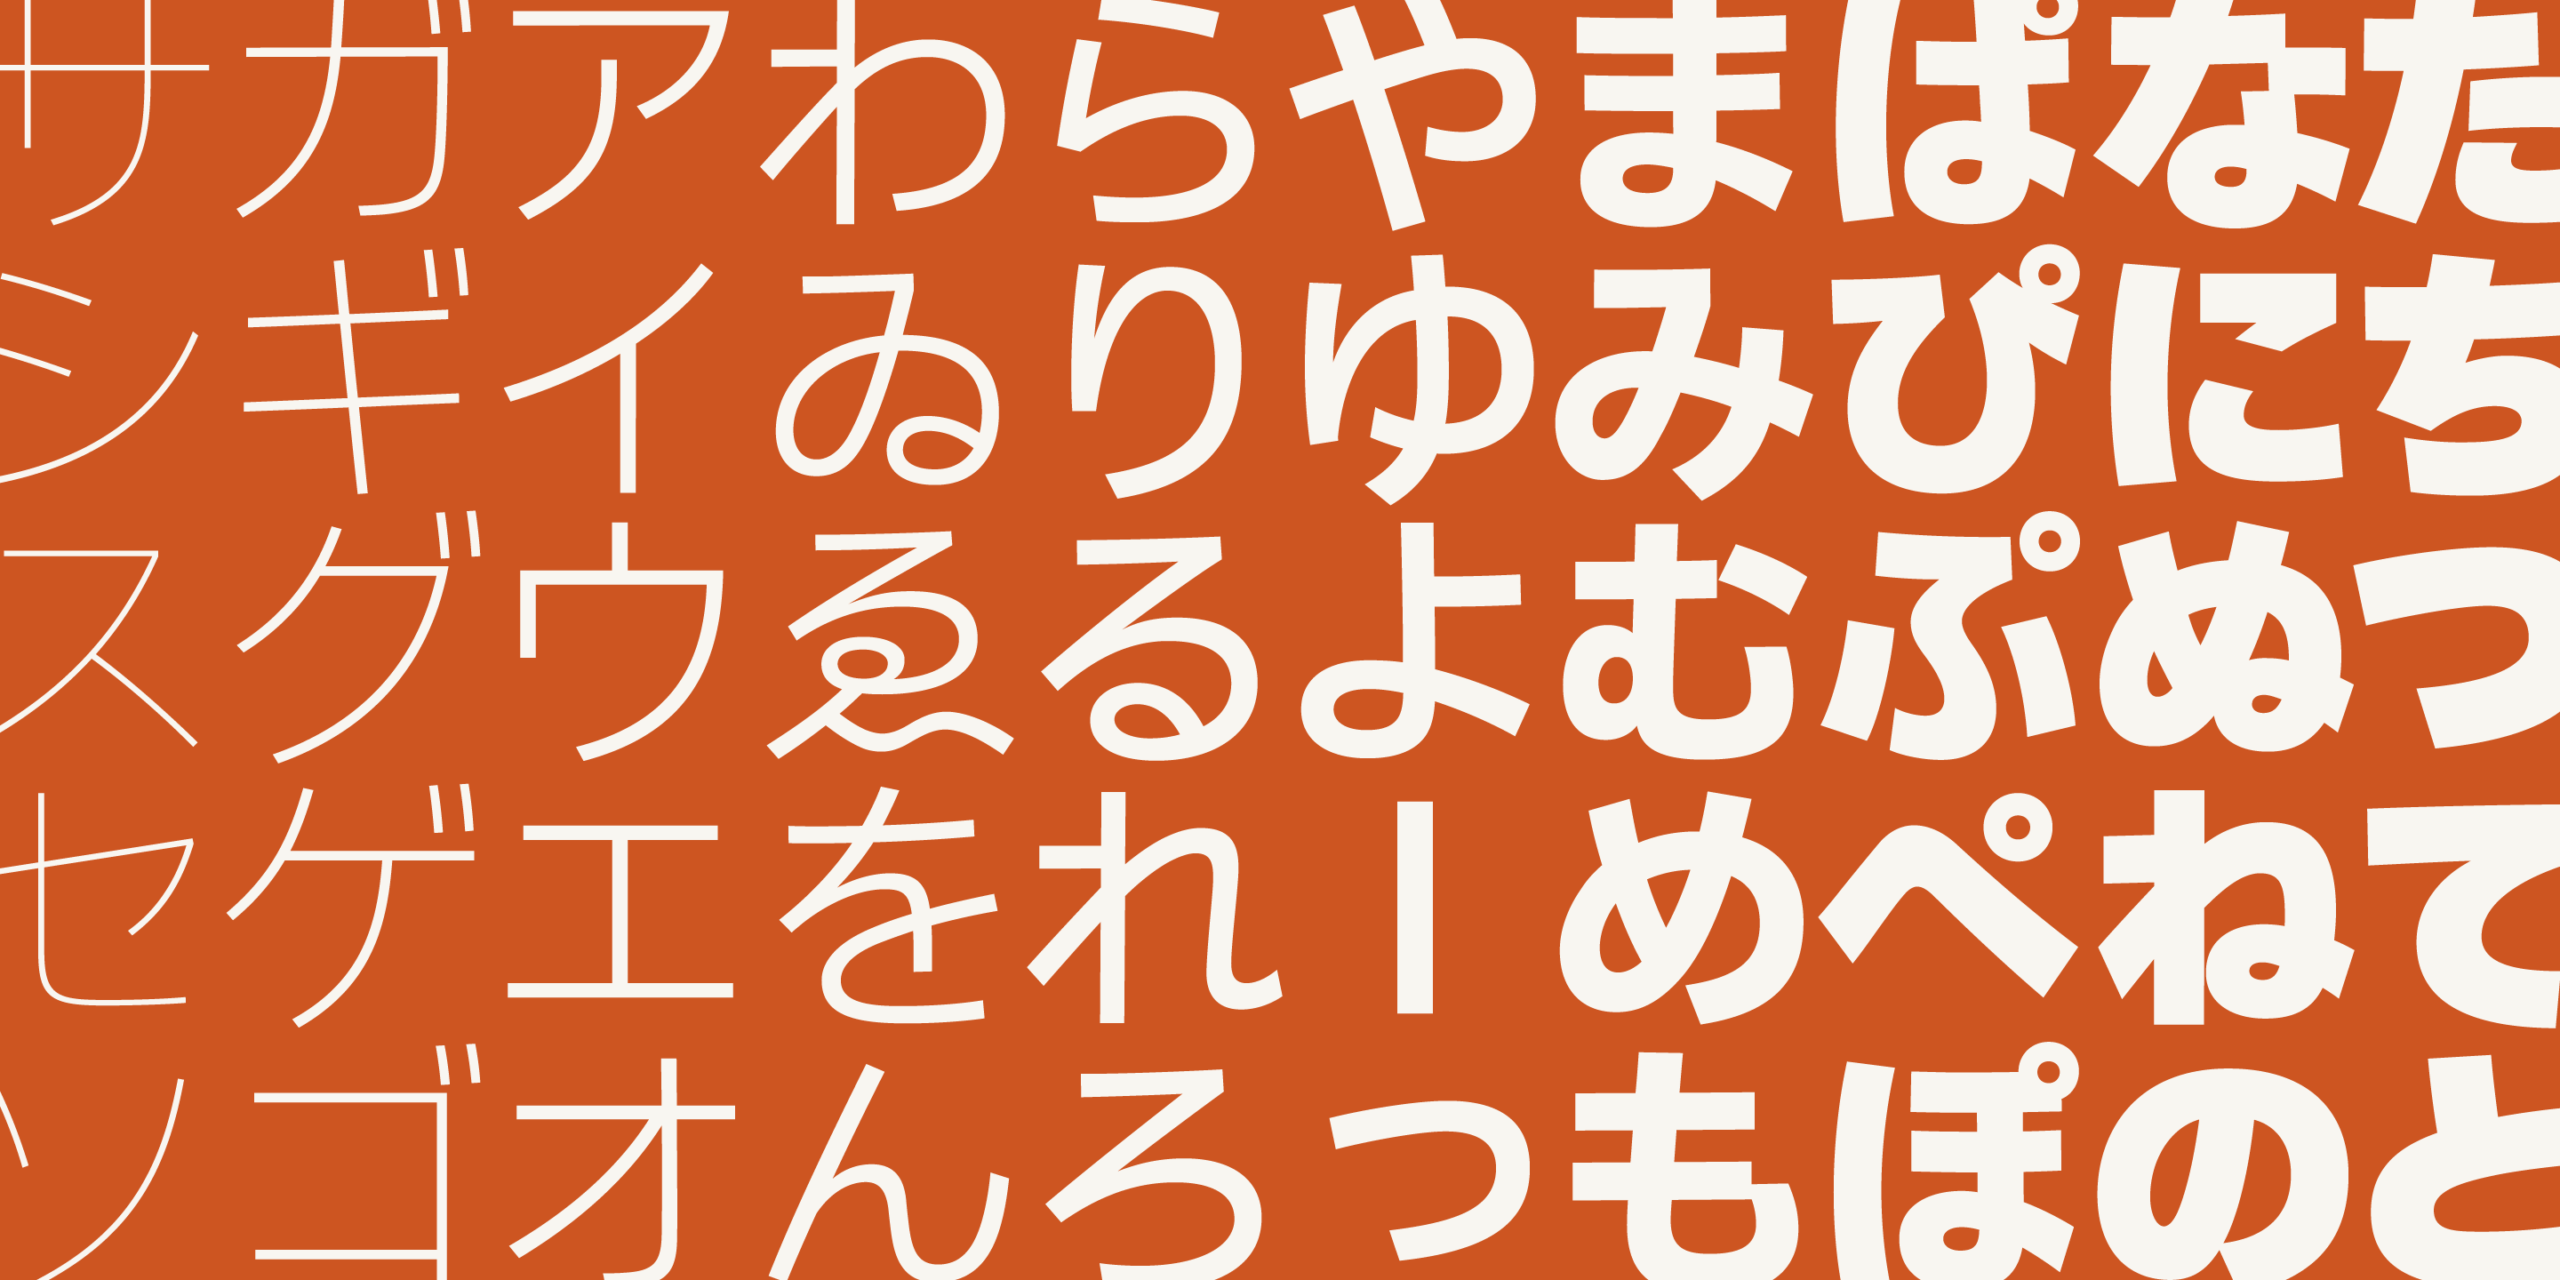 Monotype 日本語書体 Shorai Sans が2022年度グッドデザイン賞に続いて Red Dot Design Award 2022 を受賞